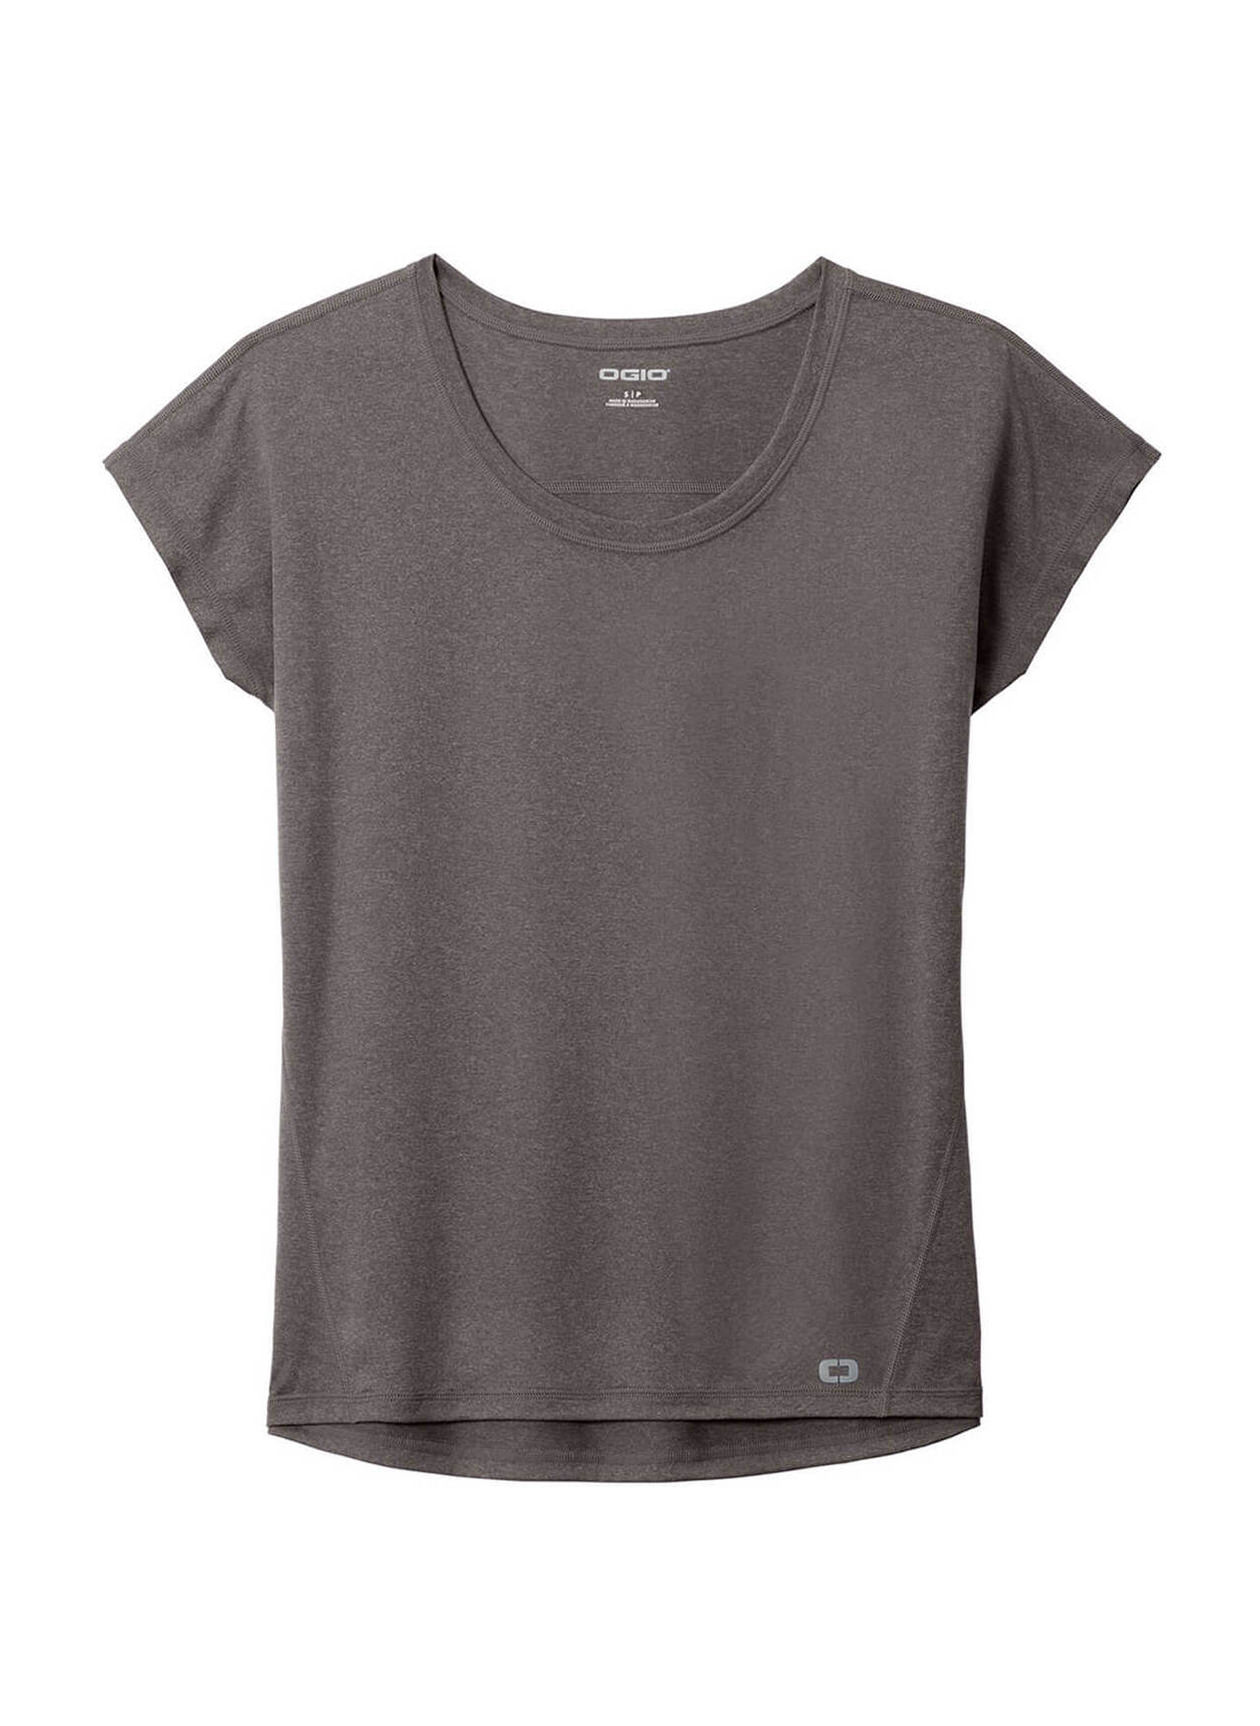 OGIO Women's Gear Grey Pulse Dolman T-Shirt